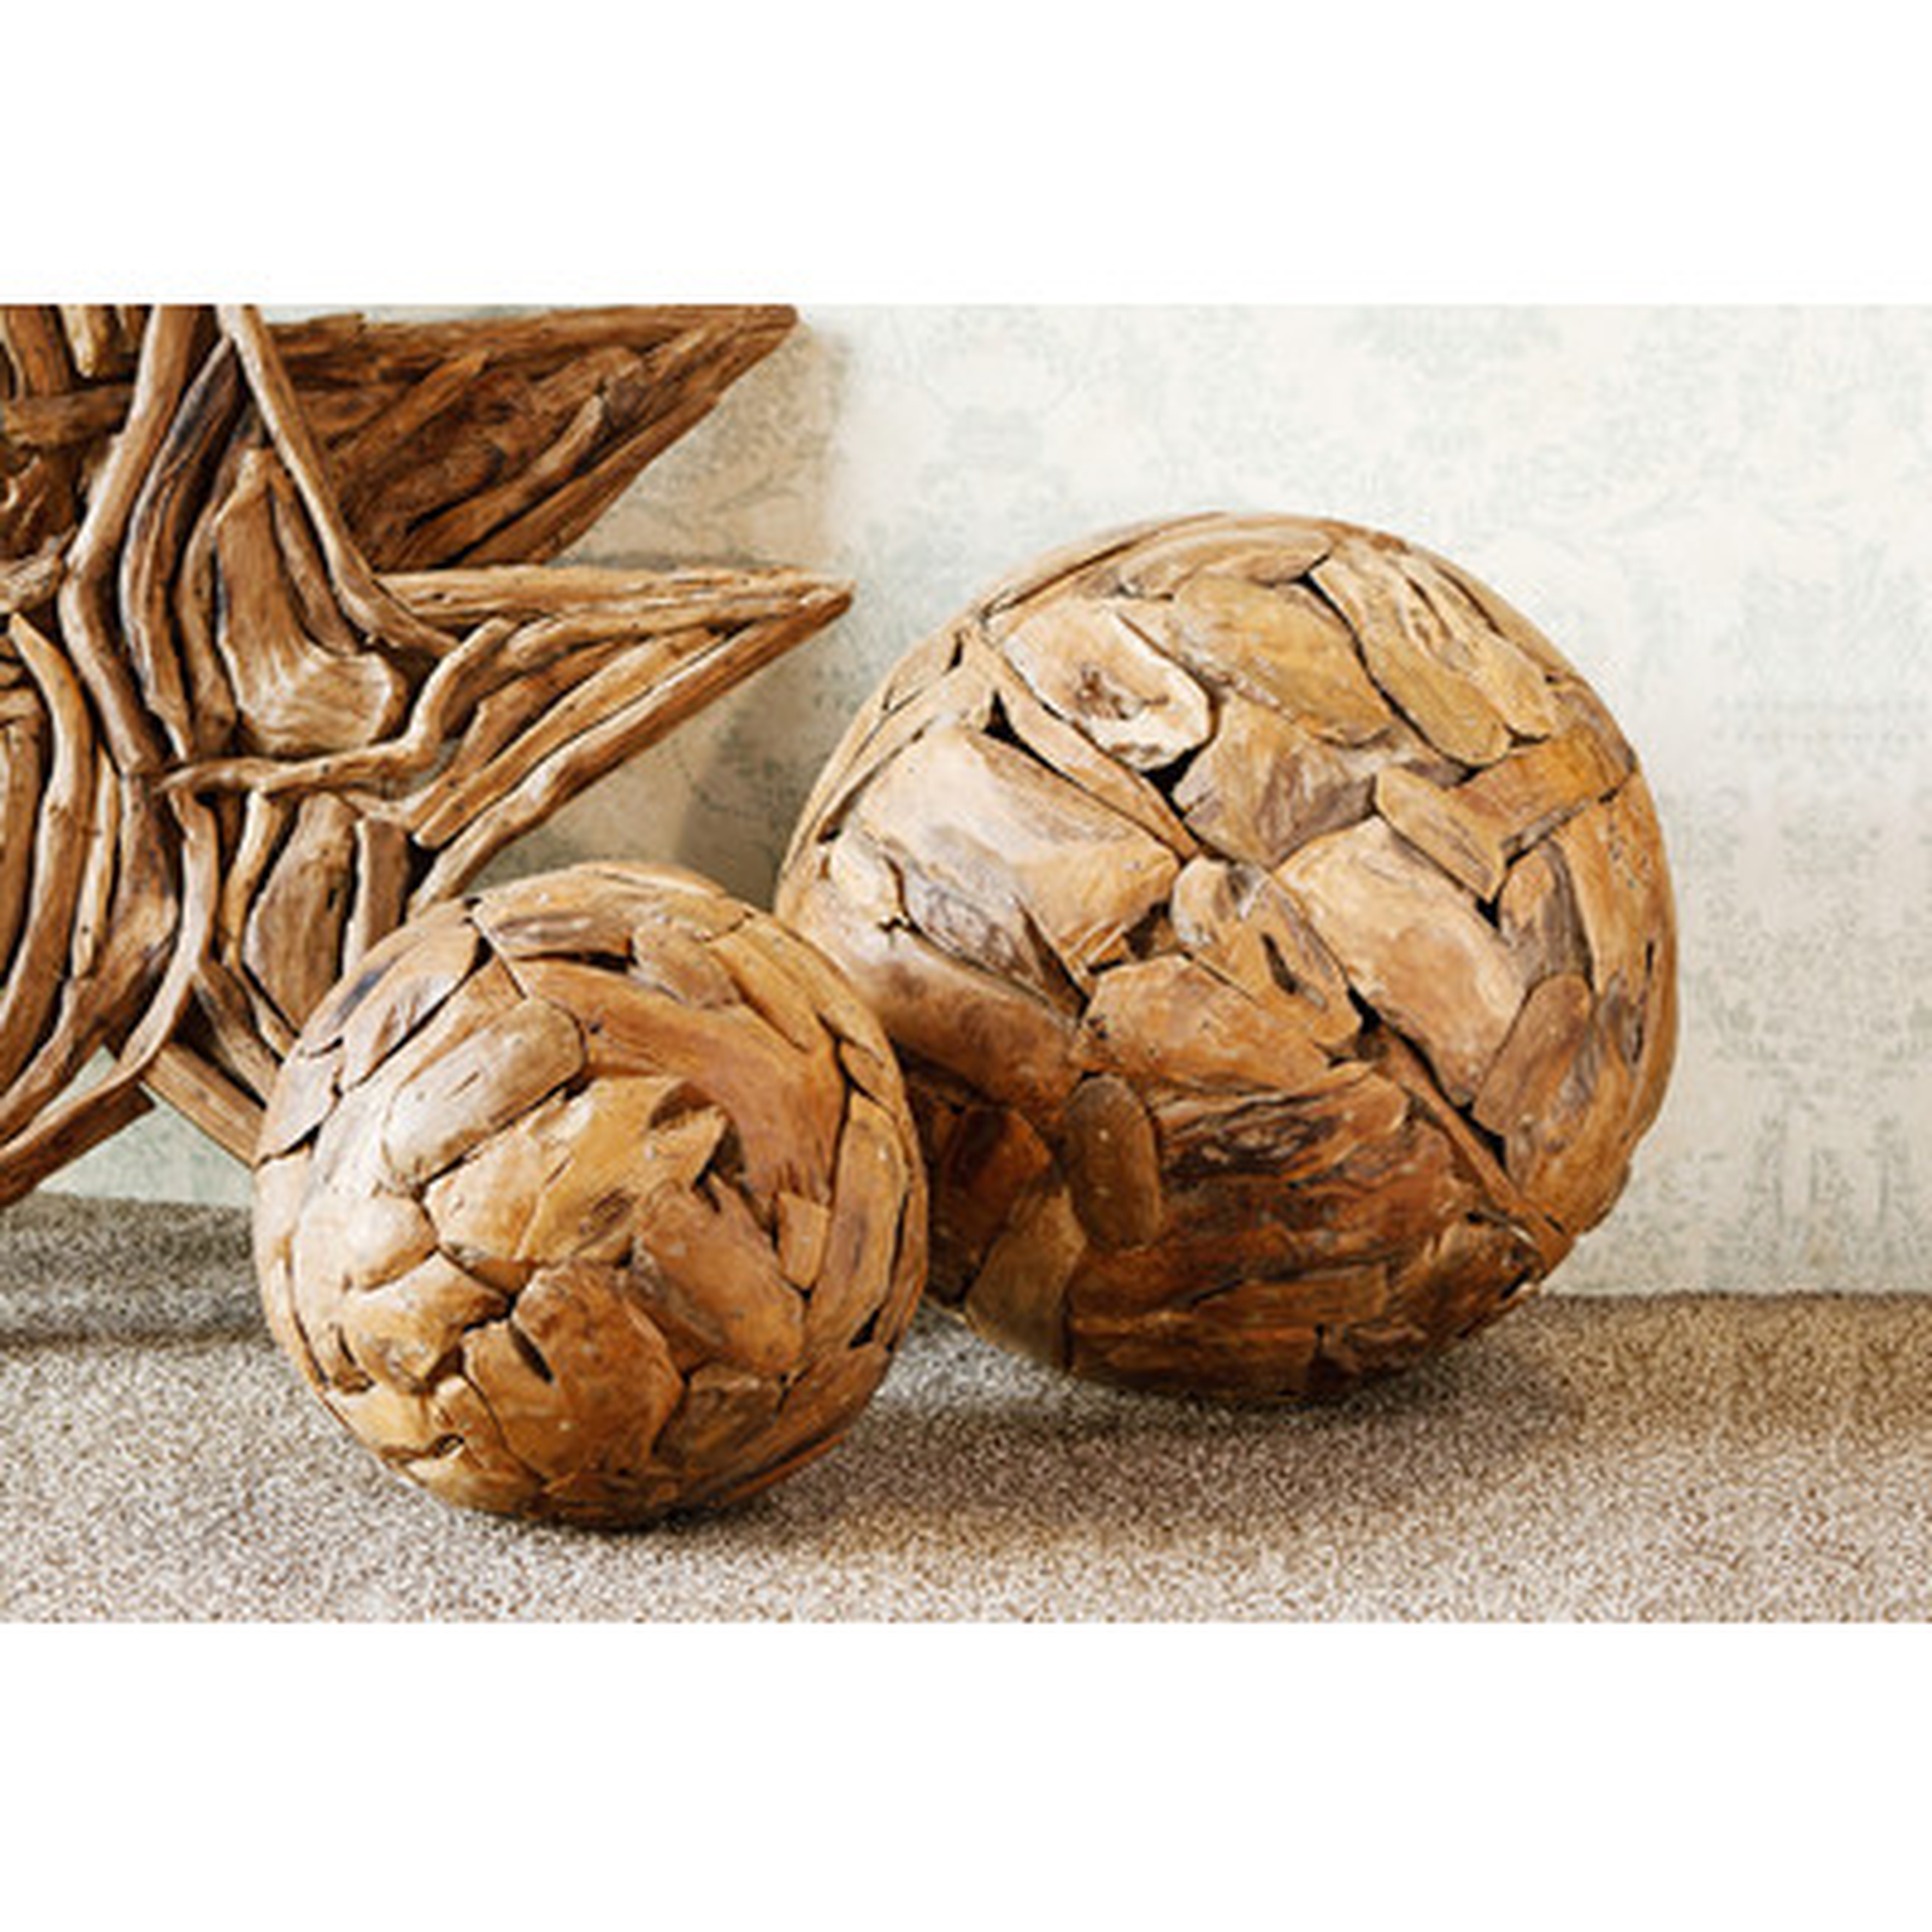 Harini Decorative Ball Sculpture,Restock in Oct 1, 2023. - Wayfair